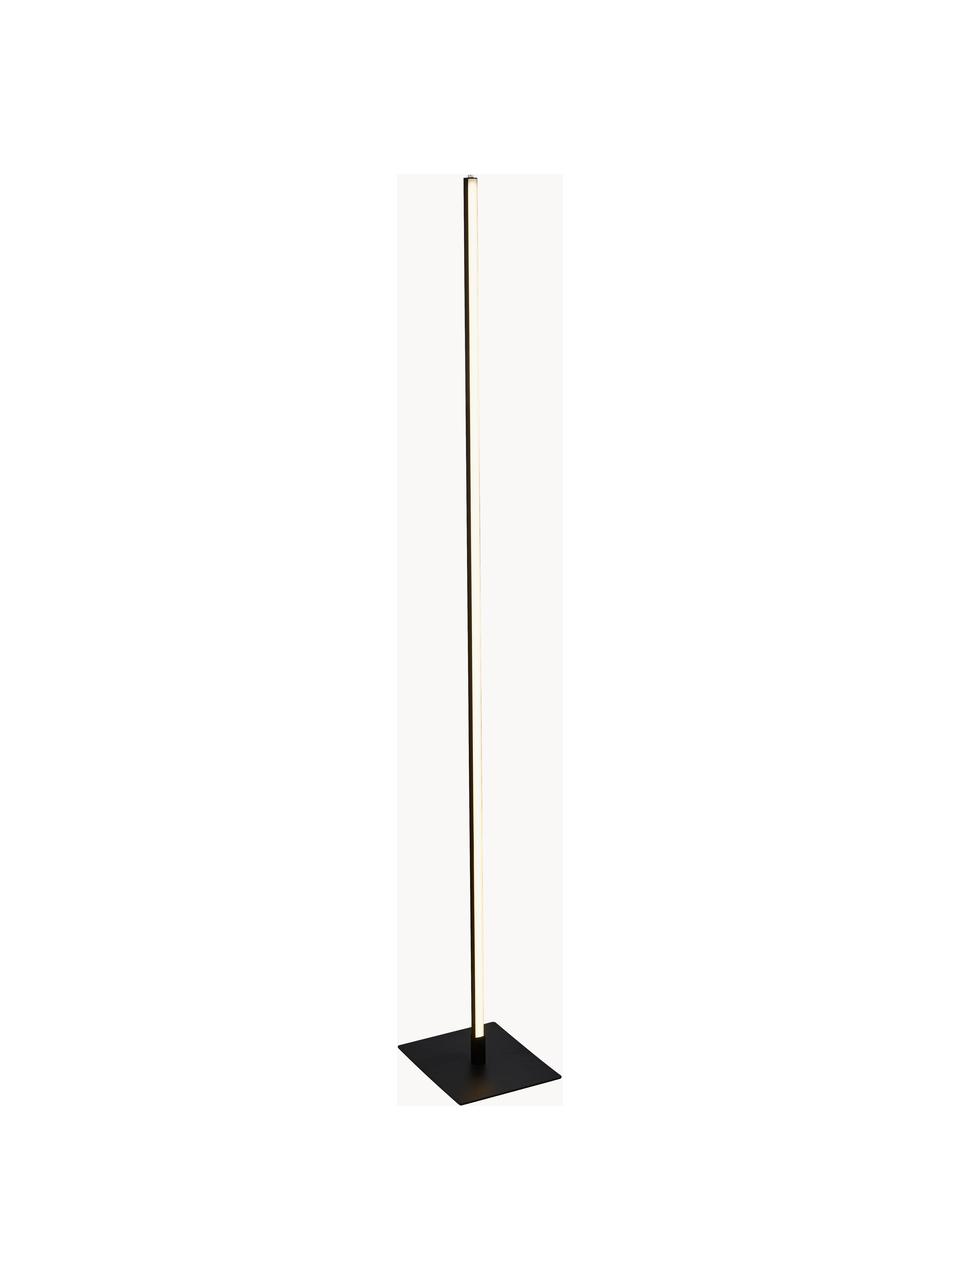 LED-Stehlampe Tribeca mit Farbwechsel-Funktion, Schwarz, H 150 cm